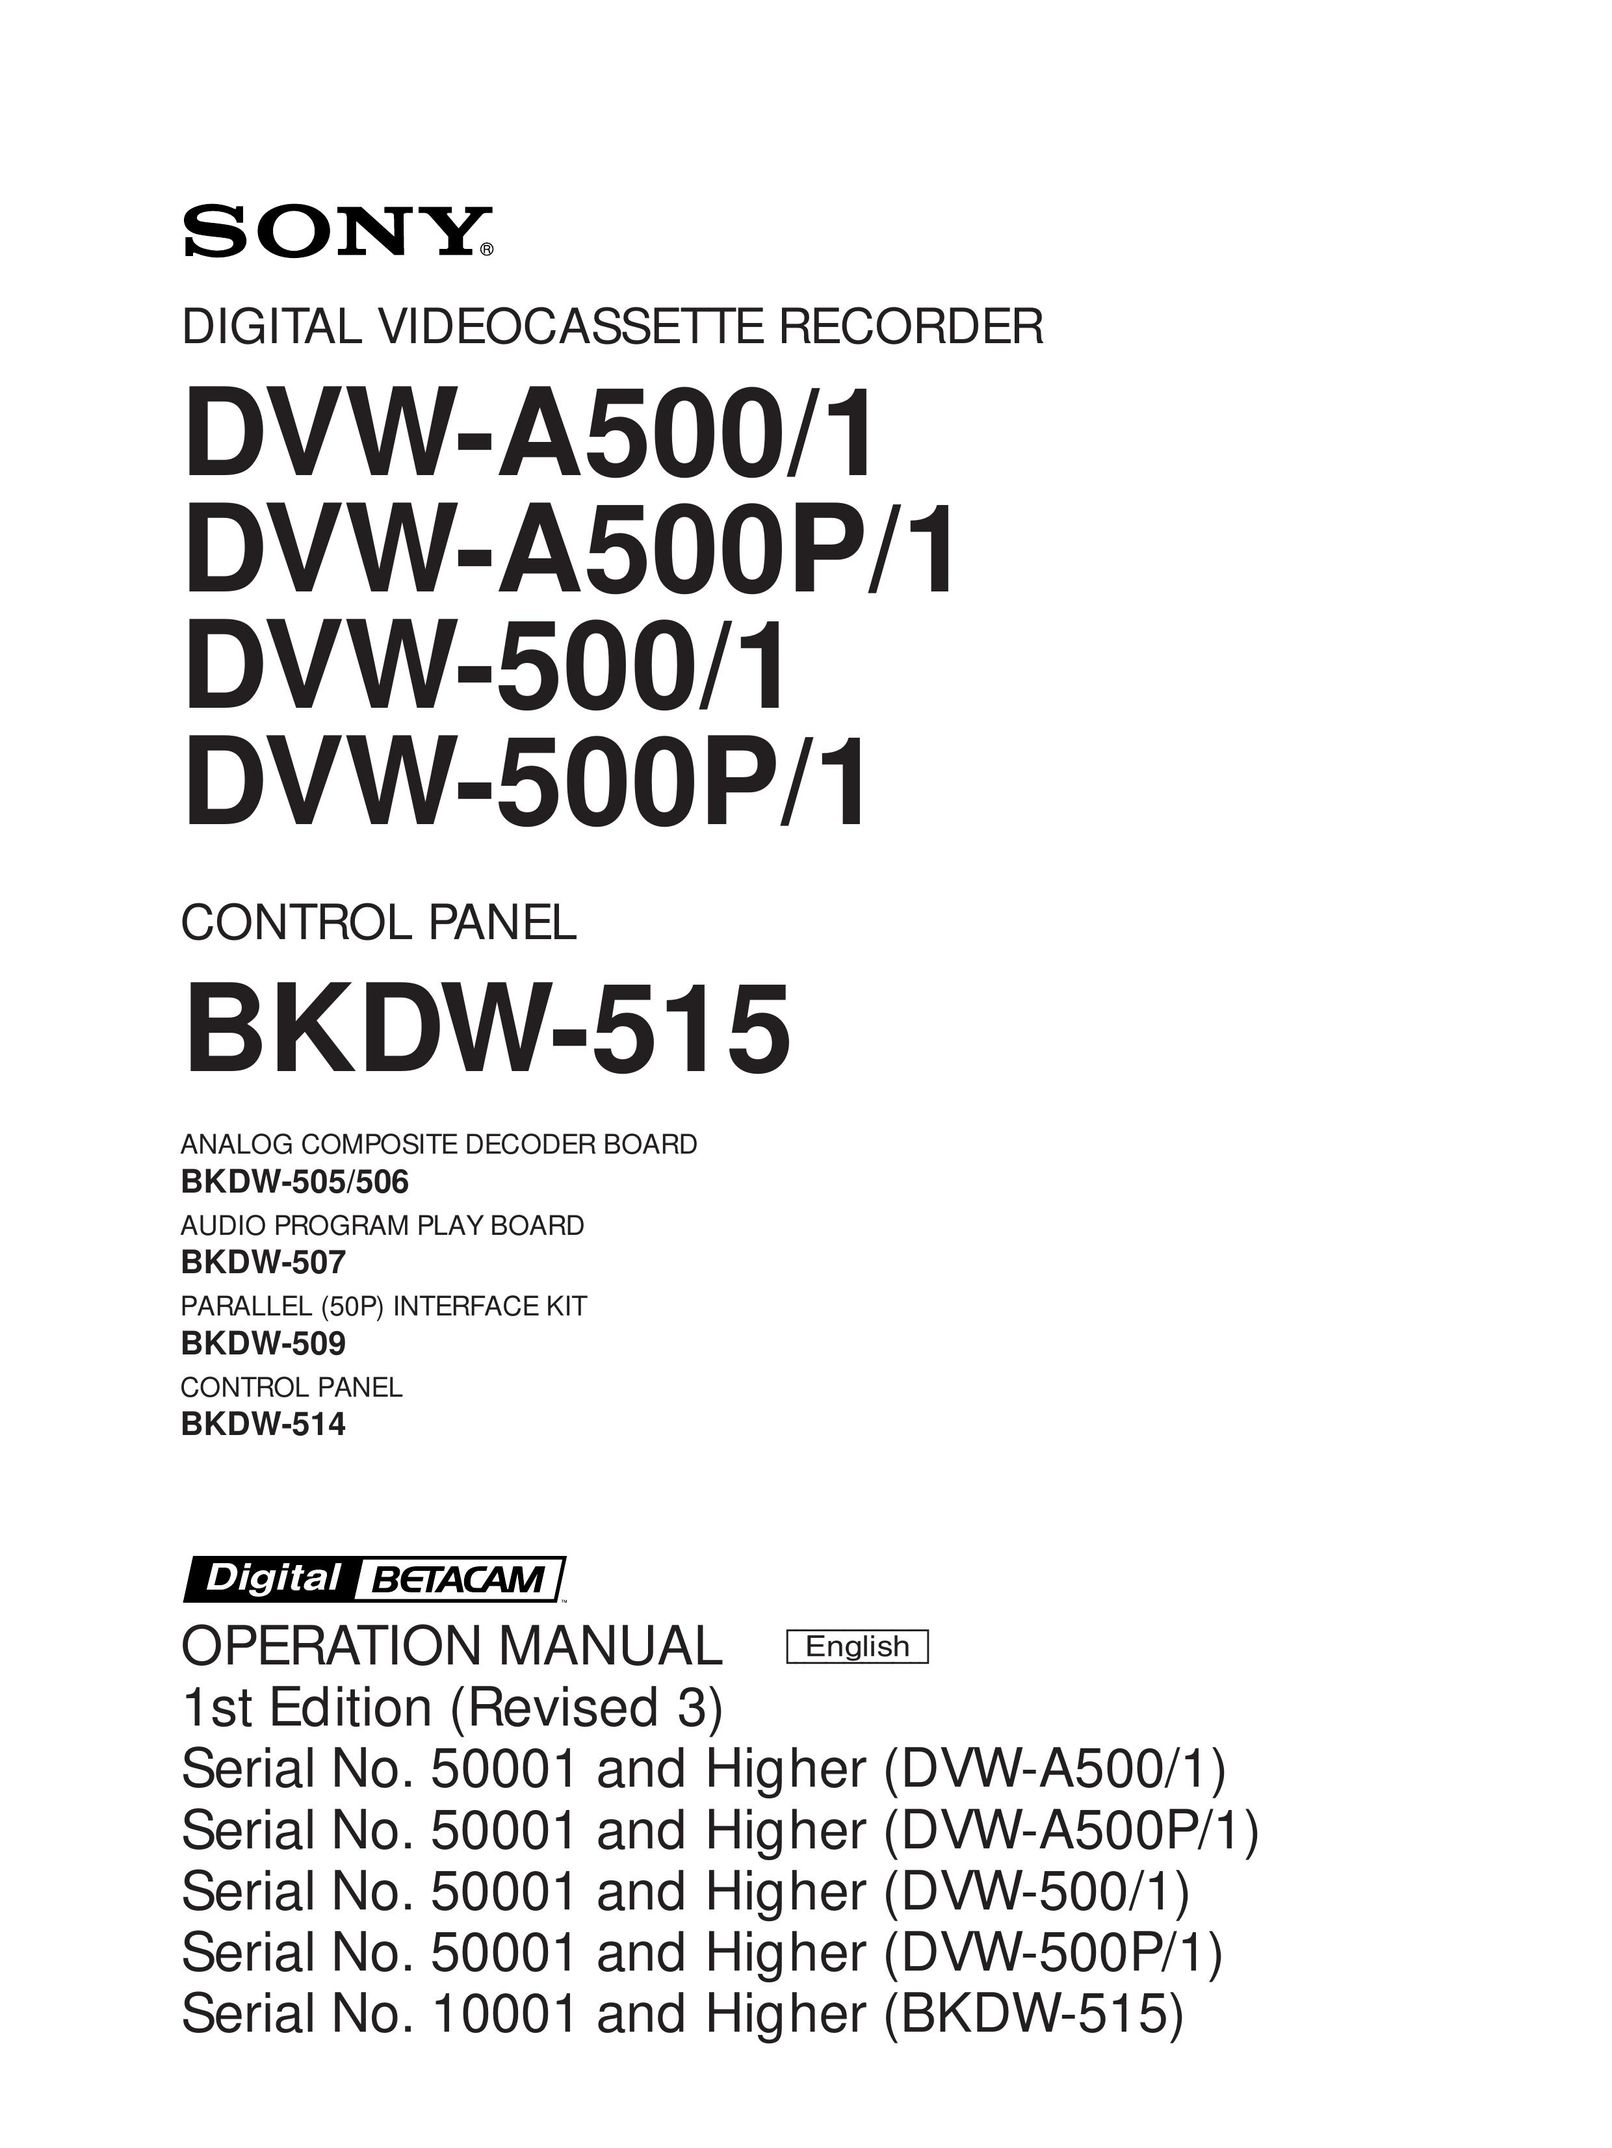 Sony BKDW-505/506 DVR User Manual